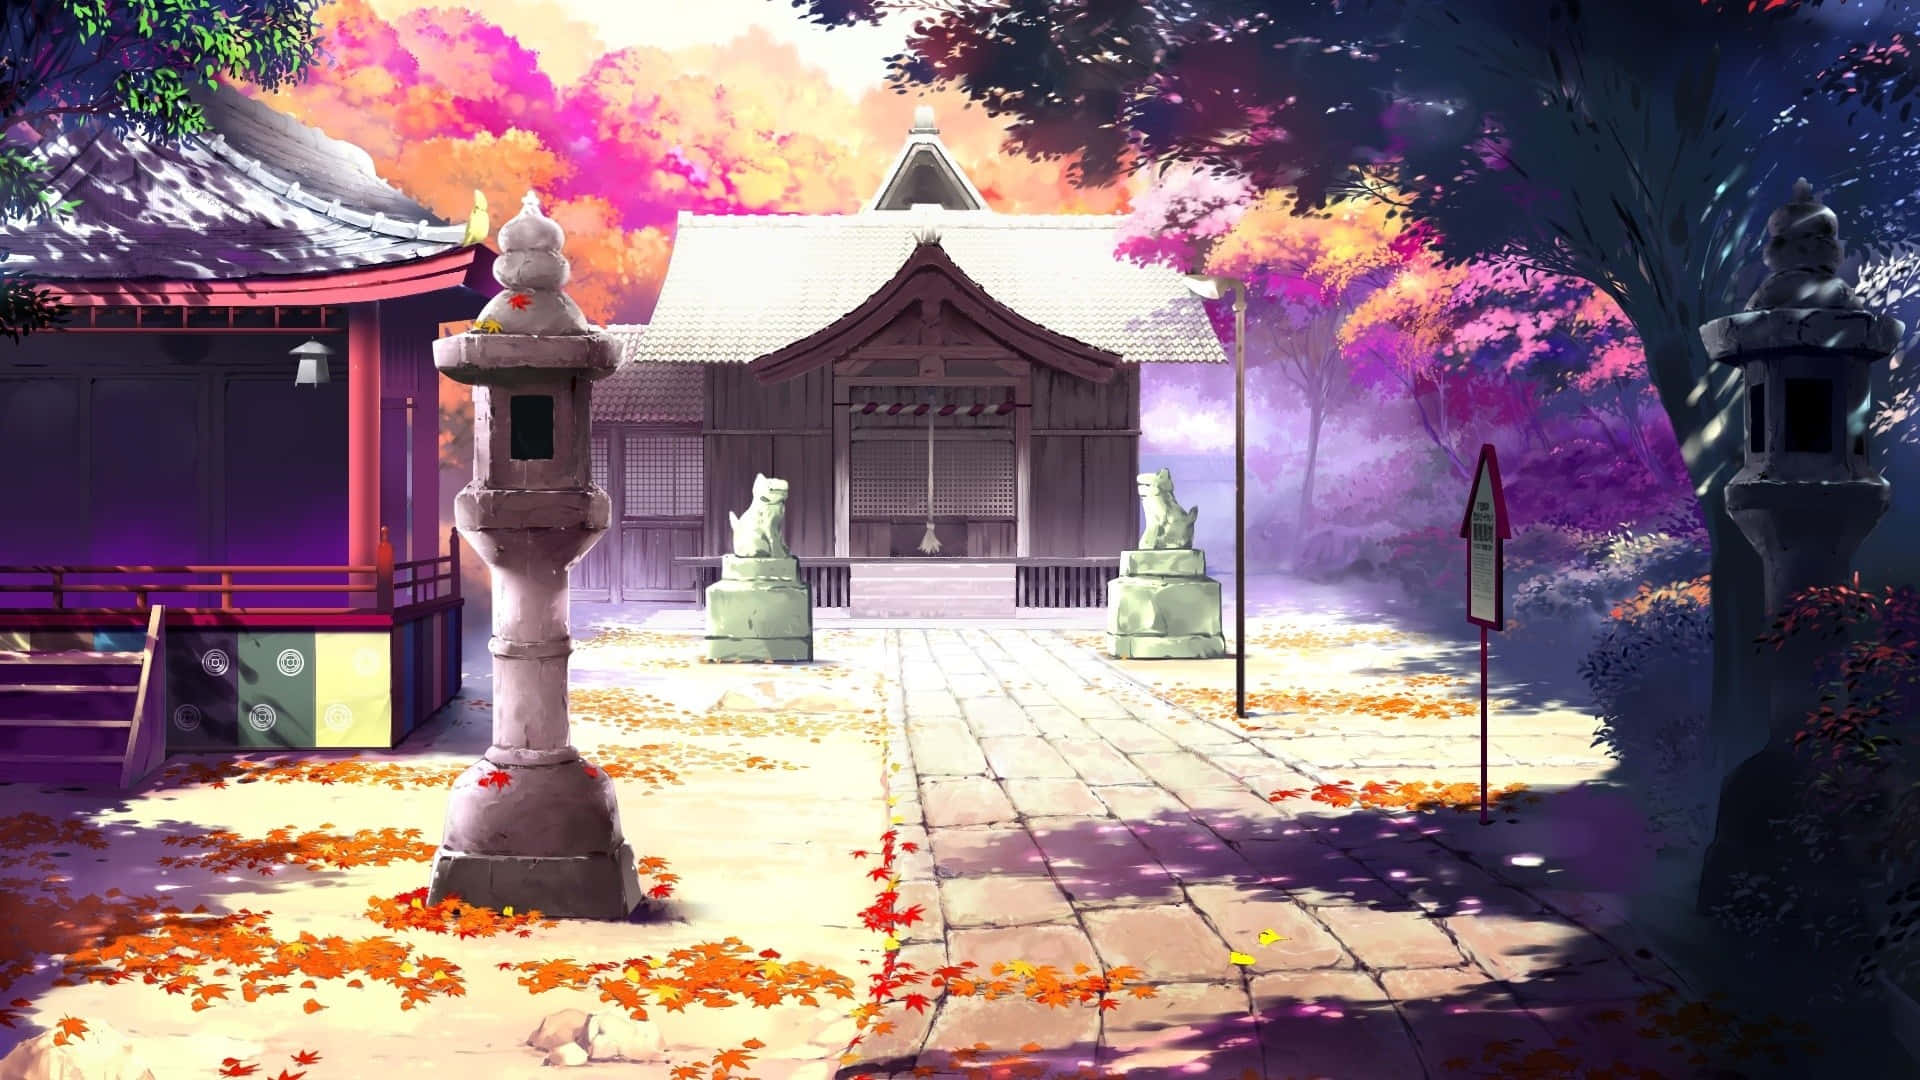 Beautiful Anime Home Scenery Wallpaper